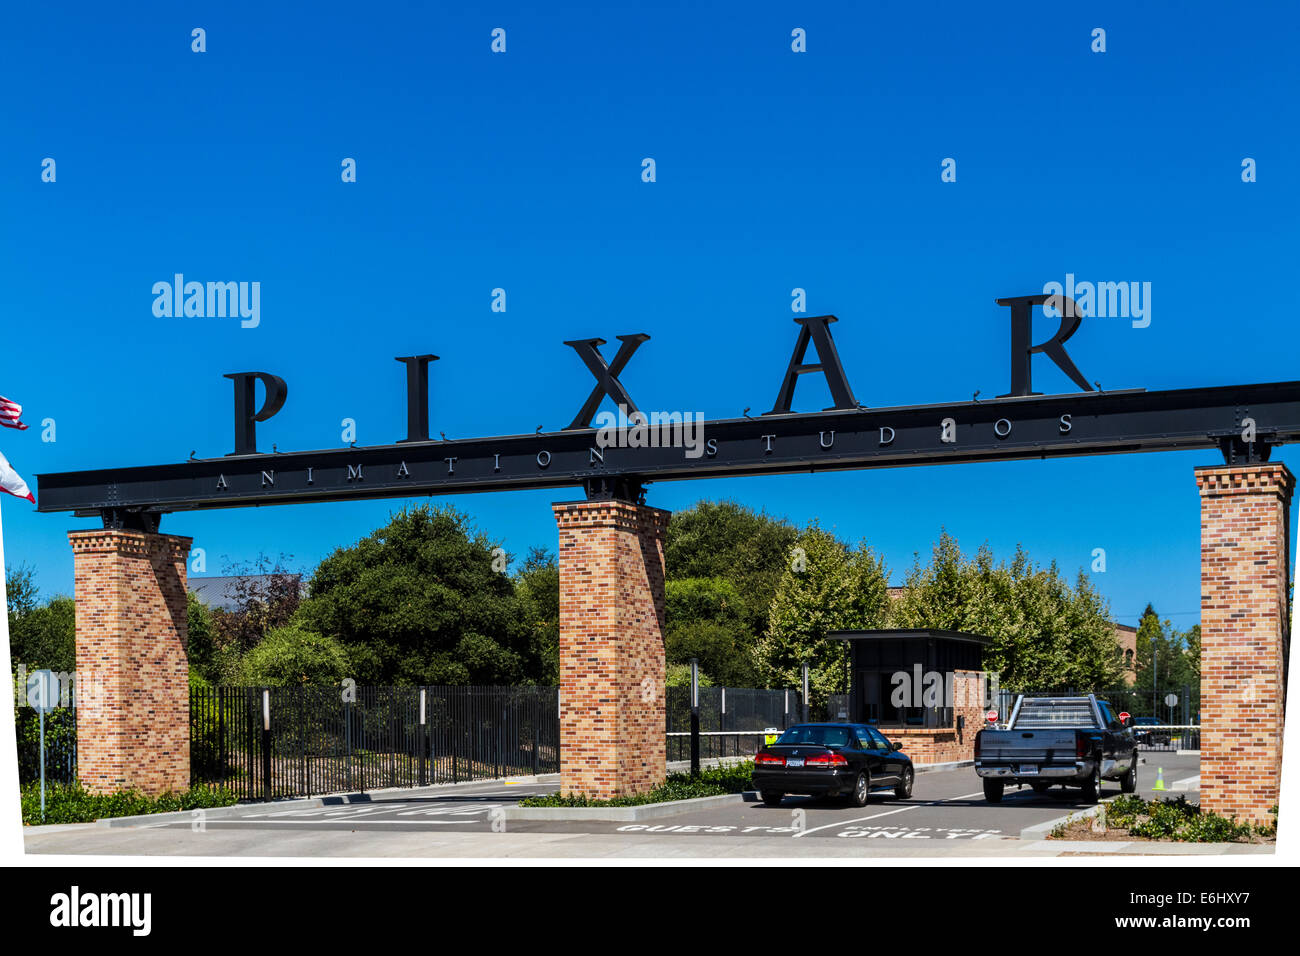 Pixar Animation Studios in Emeryville California Stock Photo - Alamy